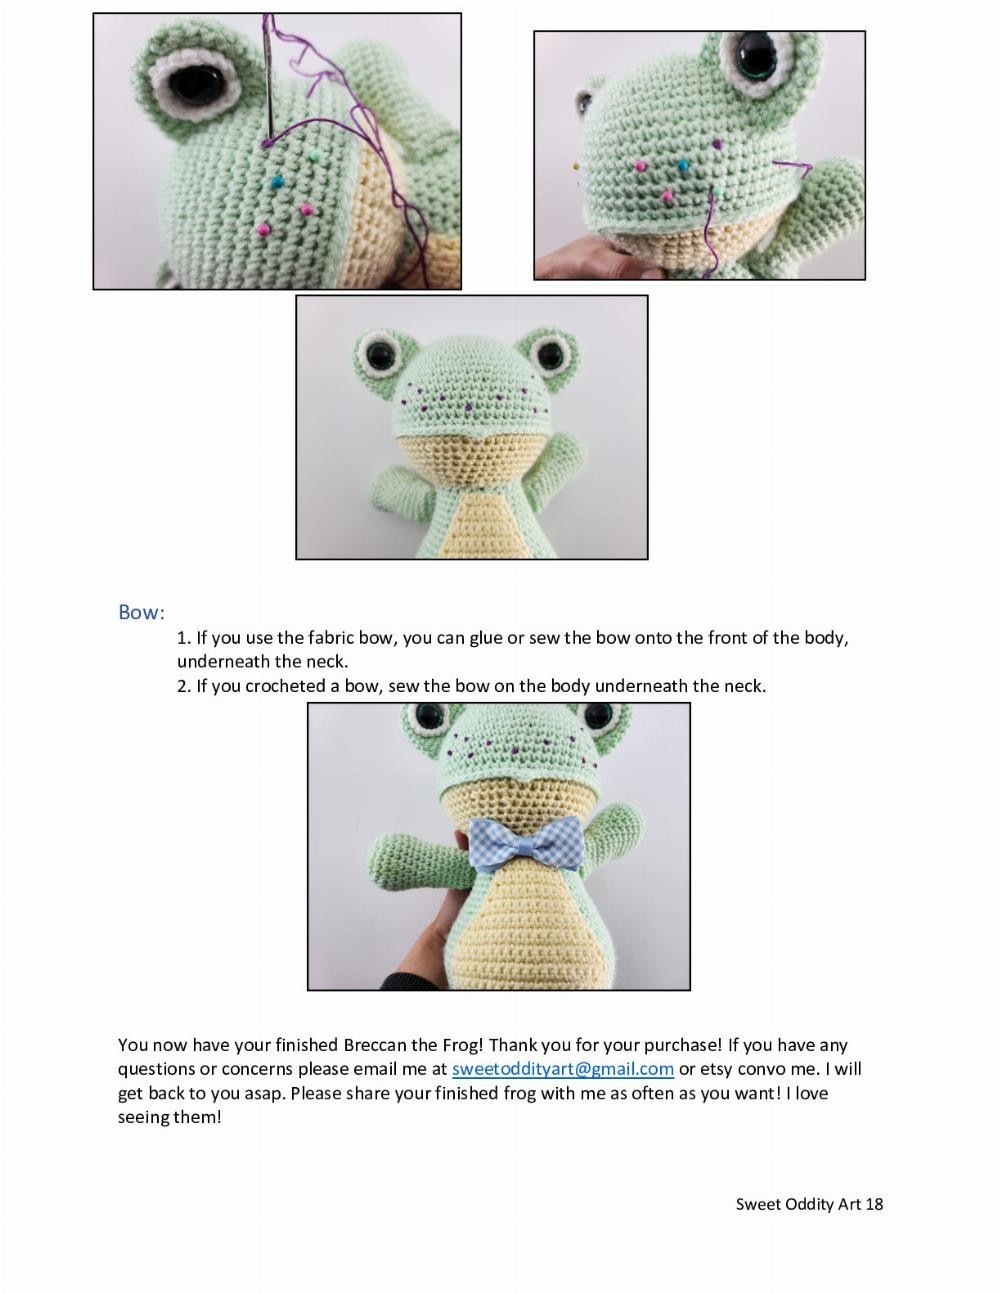 Sweet Oddity Art Breccan the Frog Crochet Pattern